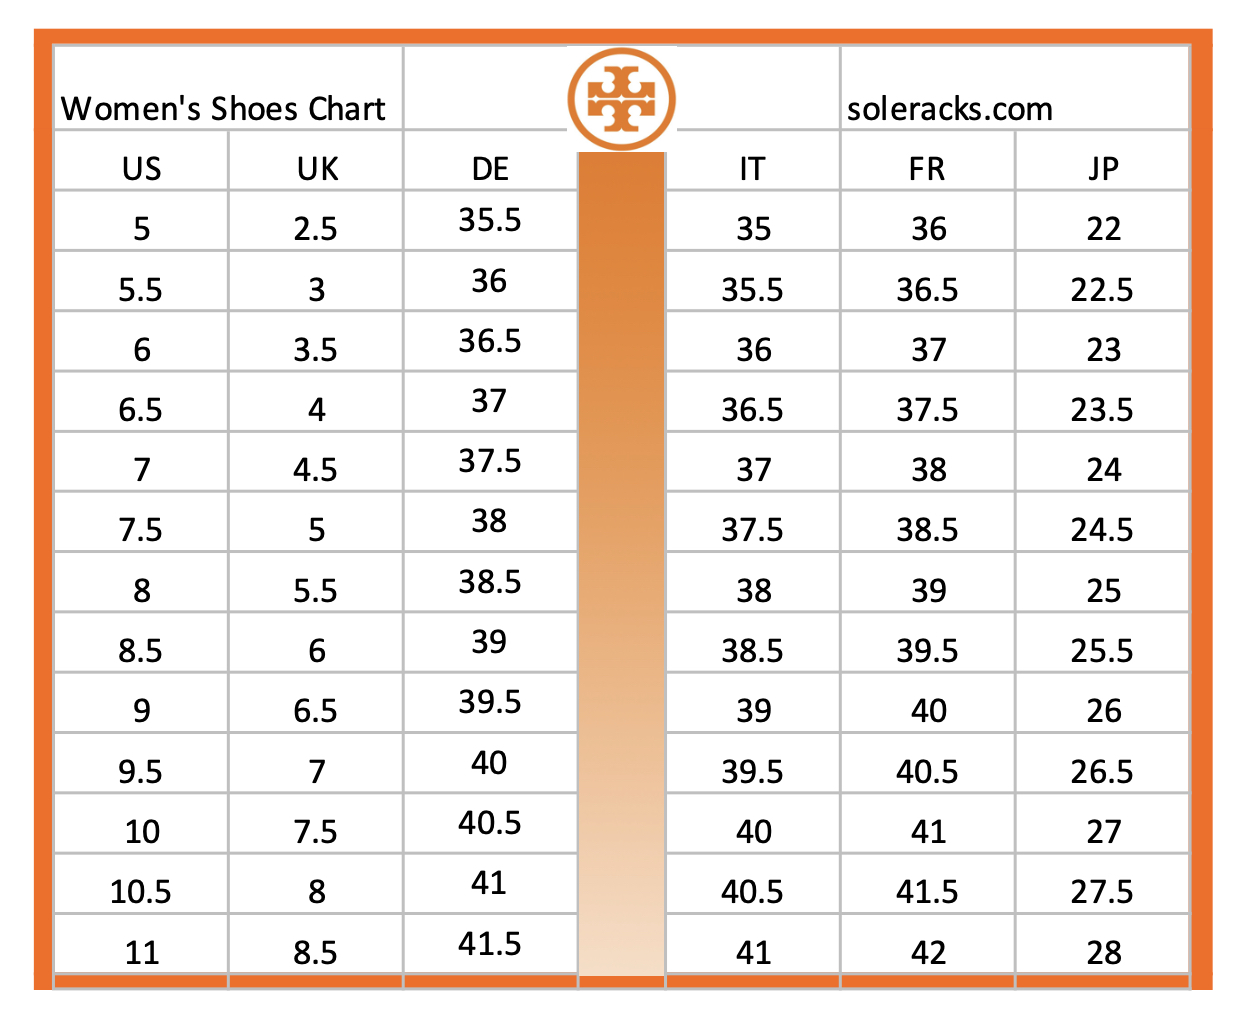 Tory Burch Shoes Size Chart - Soleracks